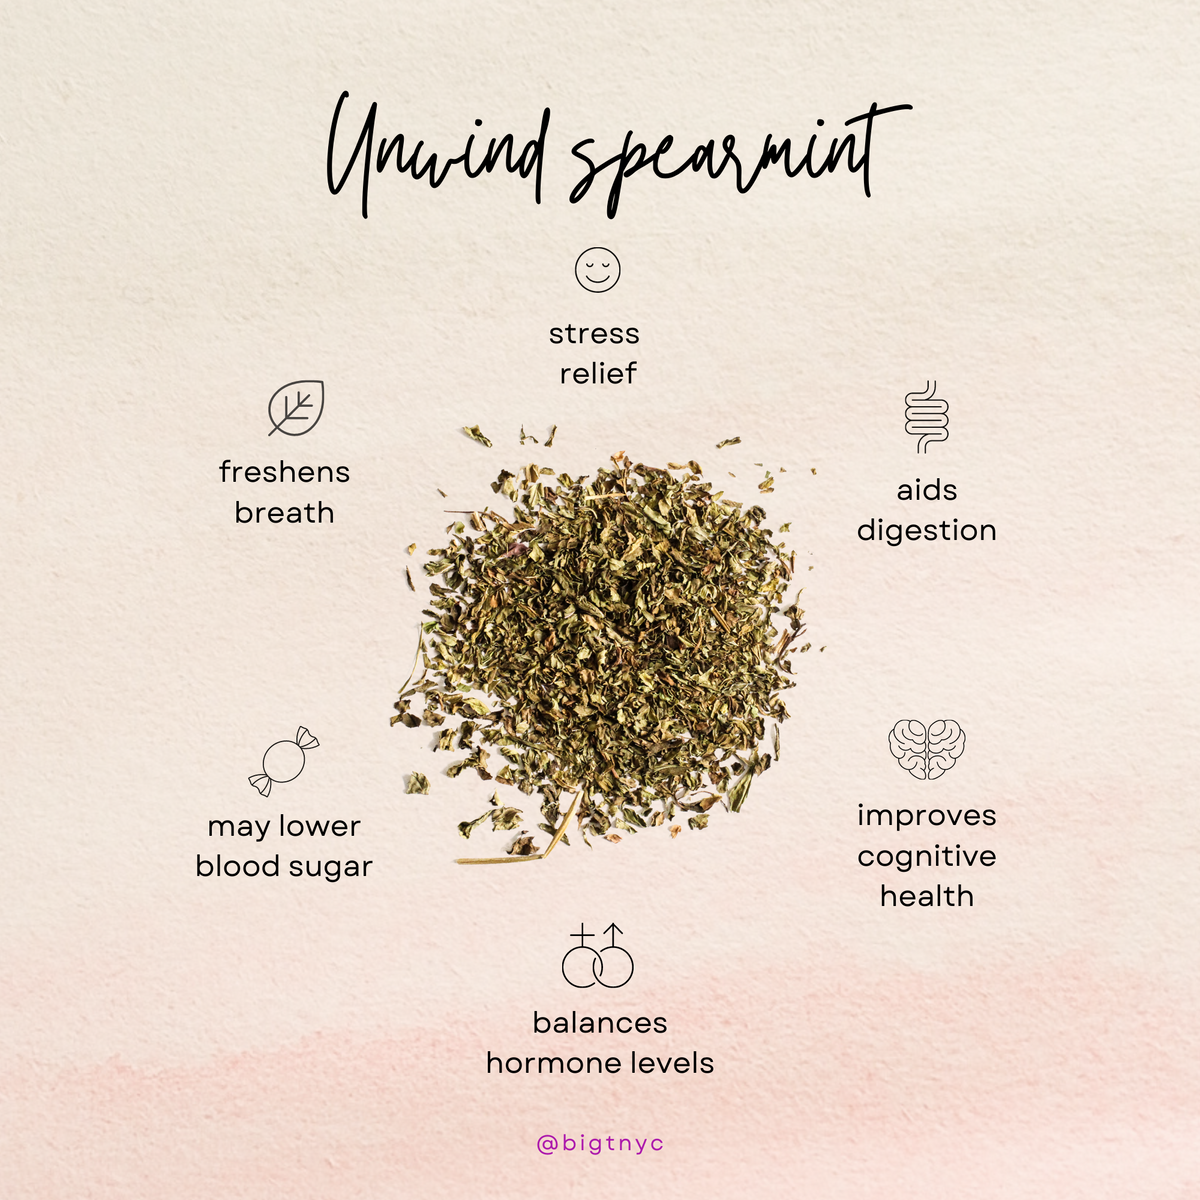 9 Incredible Spearmint Tea Benefits You Should Know – Tea Drops